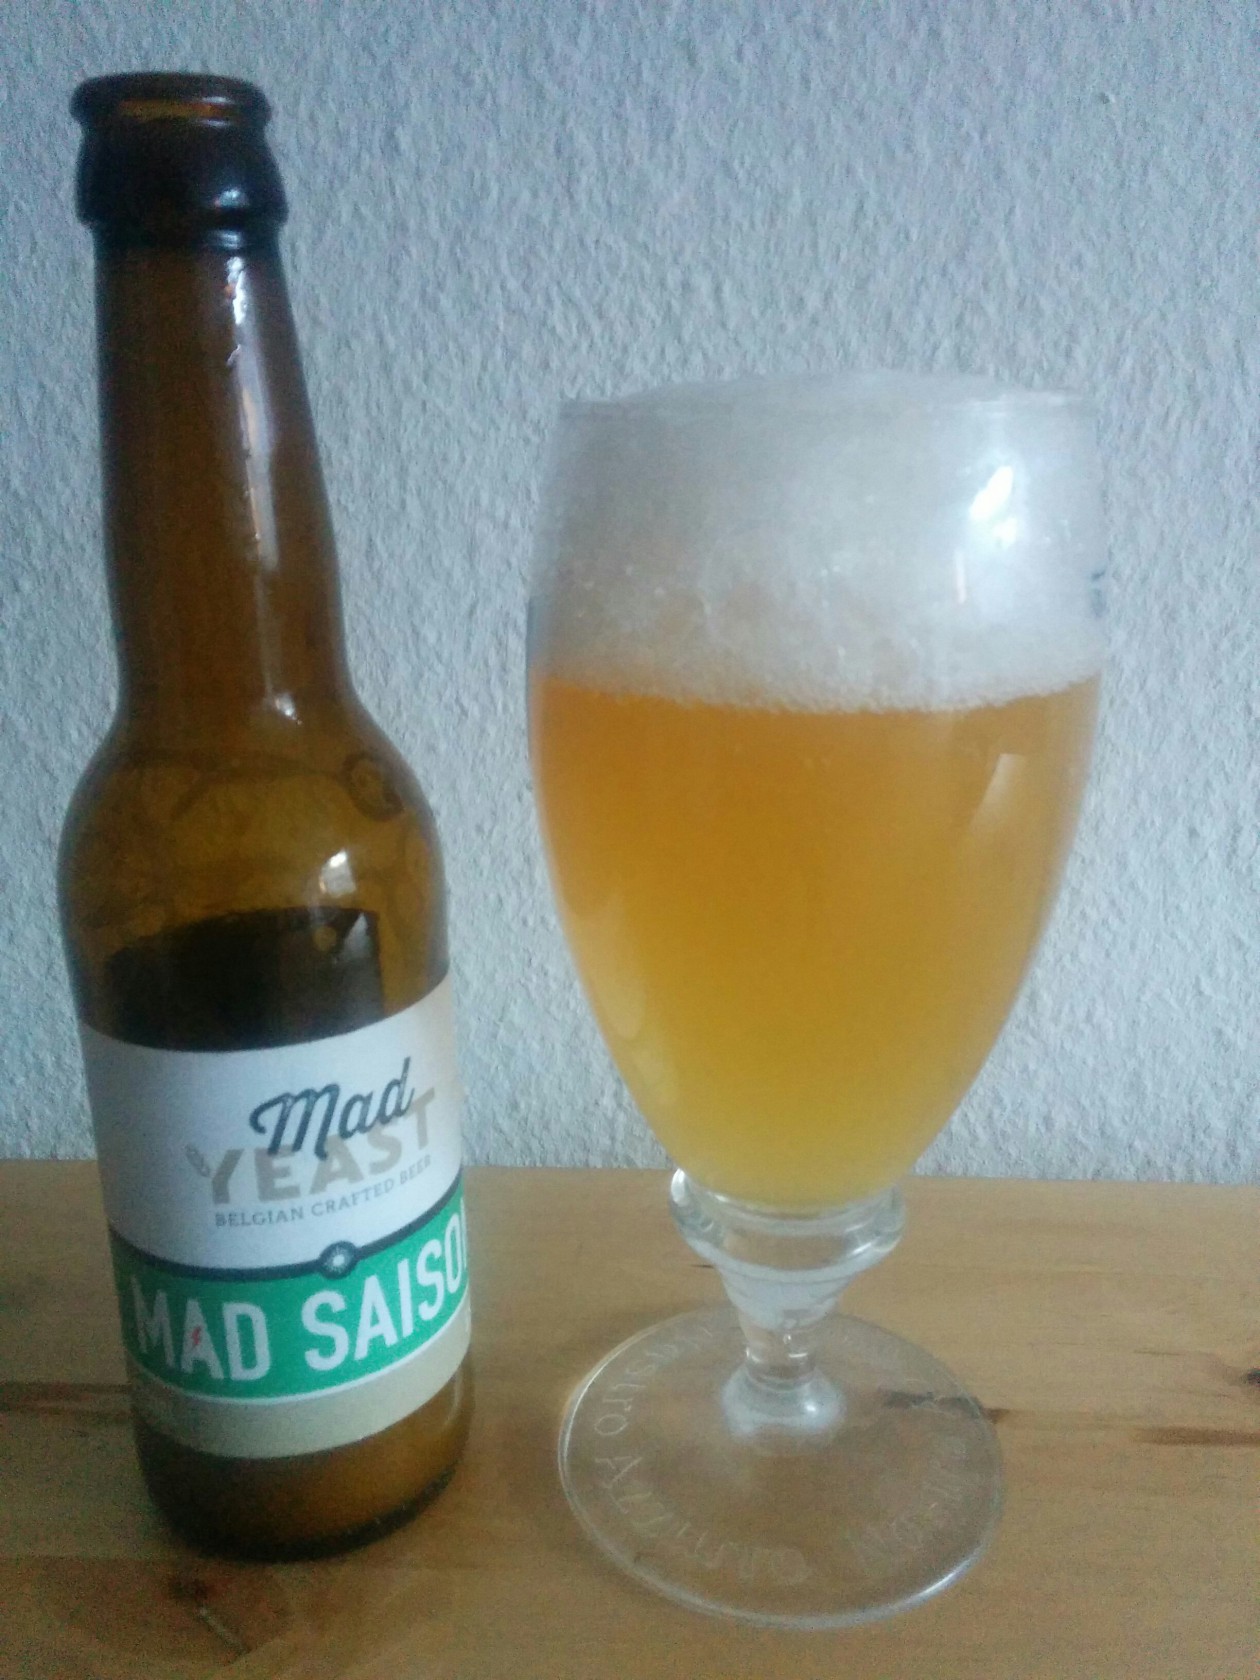 Mad Yeast - Mad Saison - i Flaske og glas